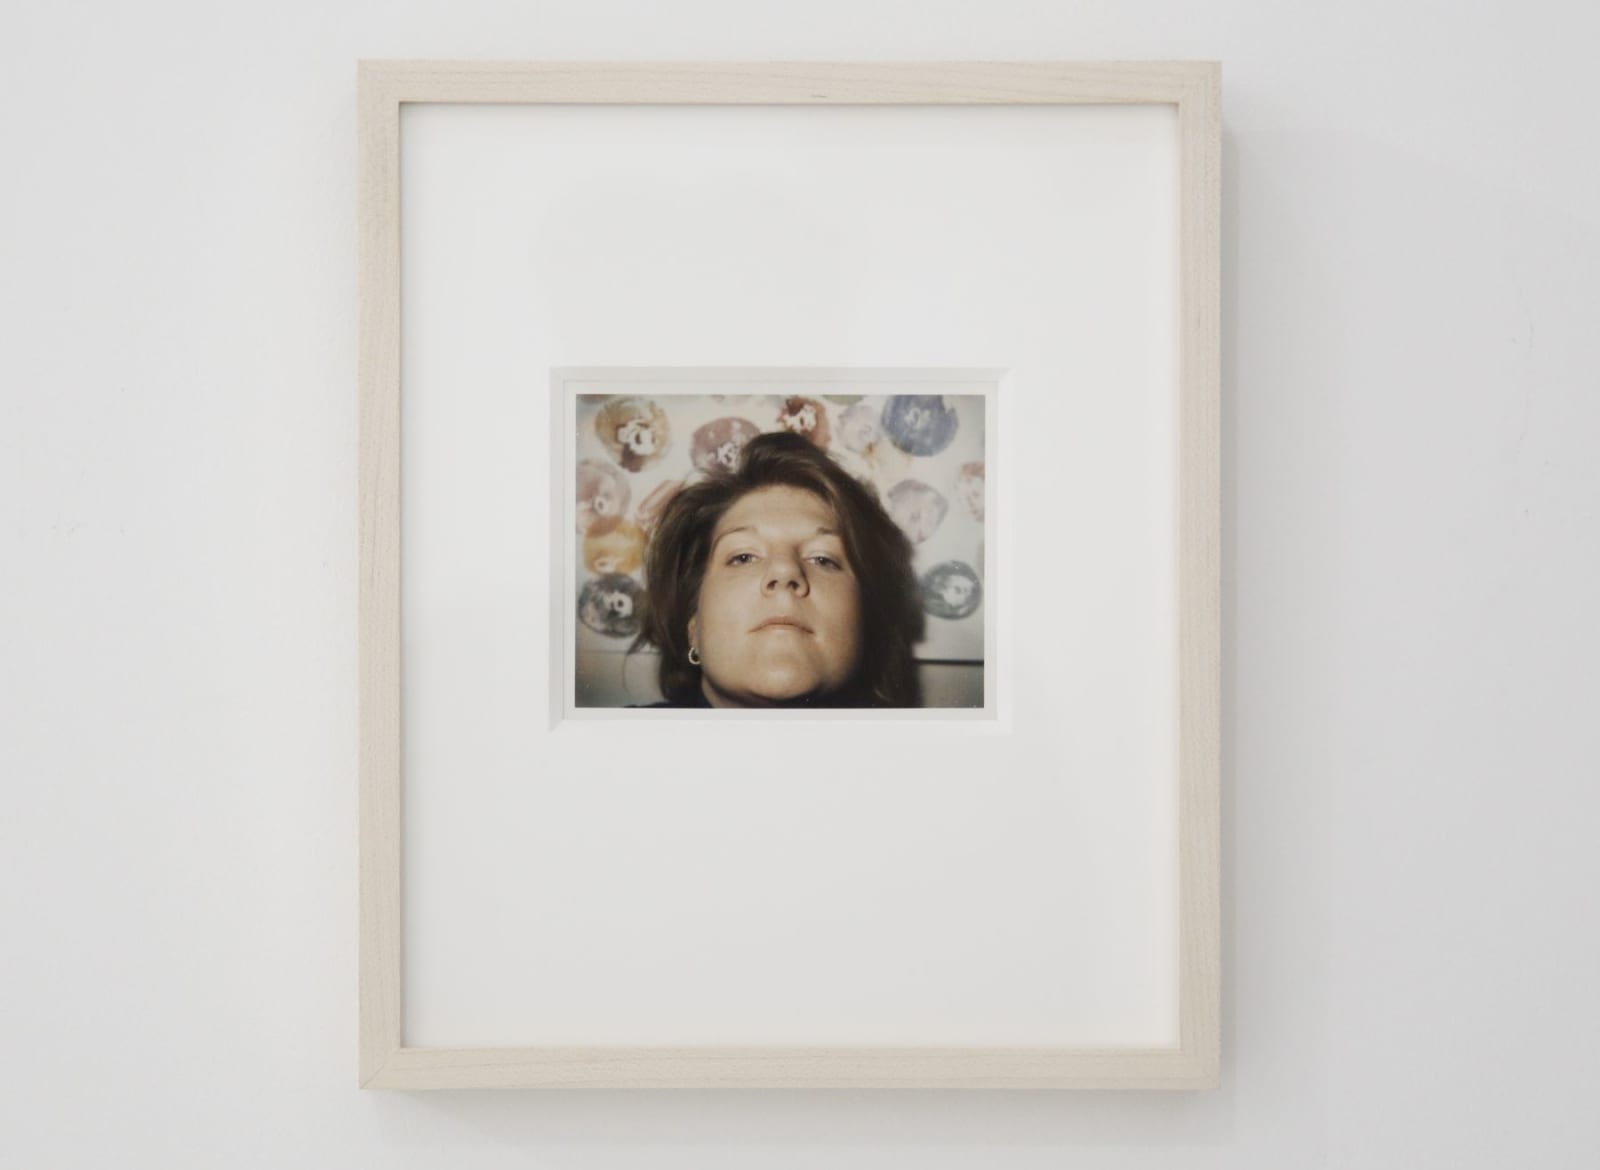 Brigid Berlin, Self-portrait with tit prints, 1971-1973